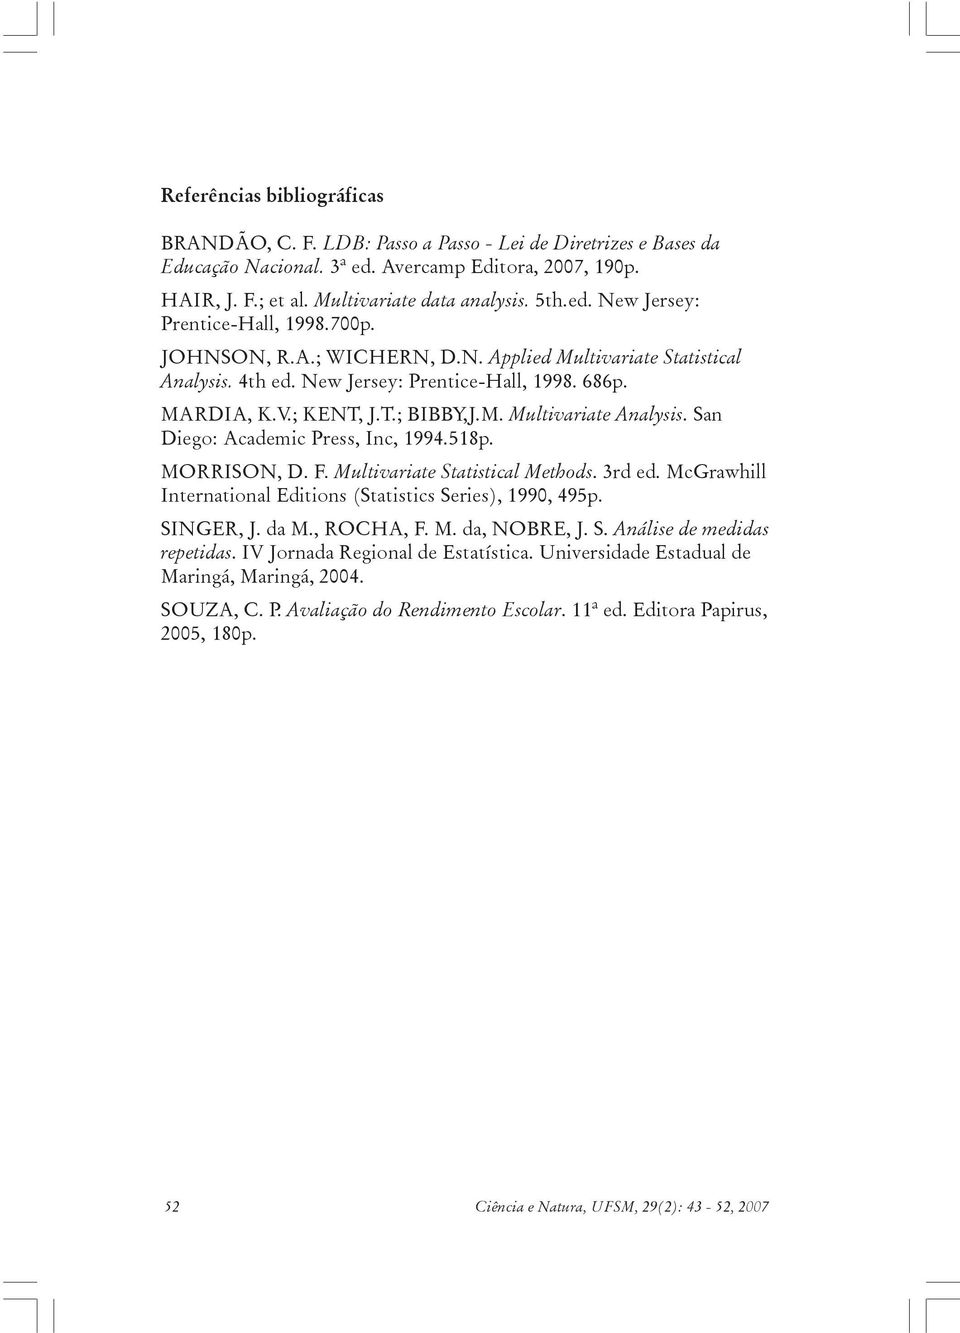 San Diego: Academic Press, Inc, 1994.518p. MORRISON, D. F. Multivariate Statistical Methods. 3rd ed. McGrawhill International Editions (Statistics Series), 1990, 495p. SINGER, J. da M., ROCHA, F. M. da, NOBRE, J.